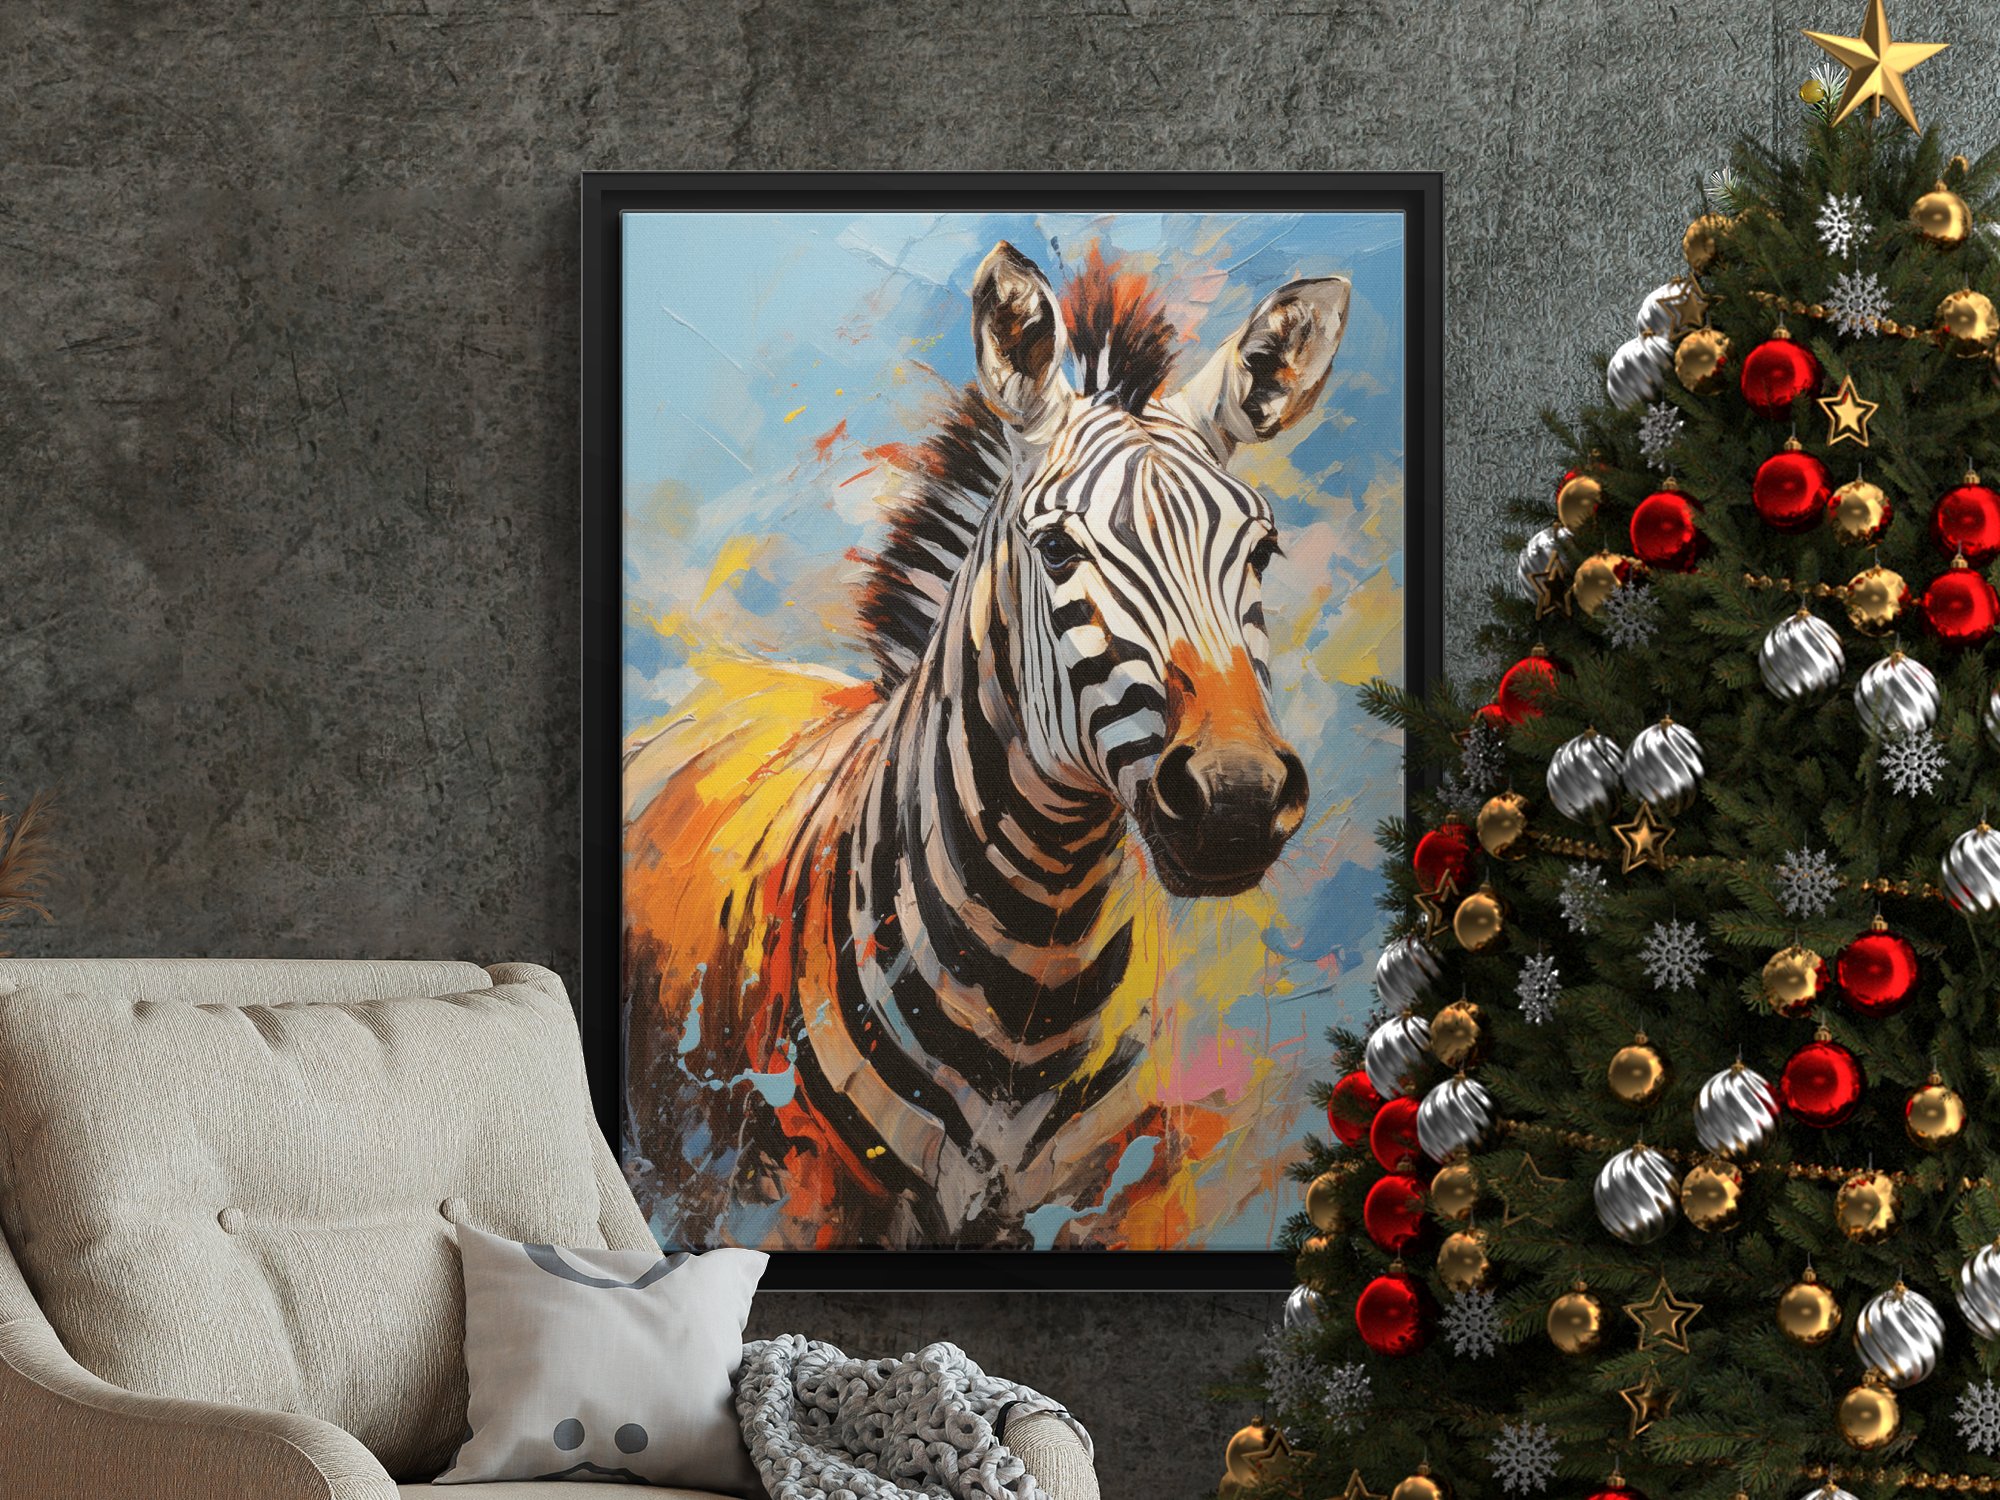 Zebra impasto wall art portrait with visible loose brushstrokes